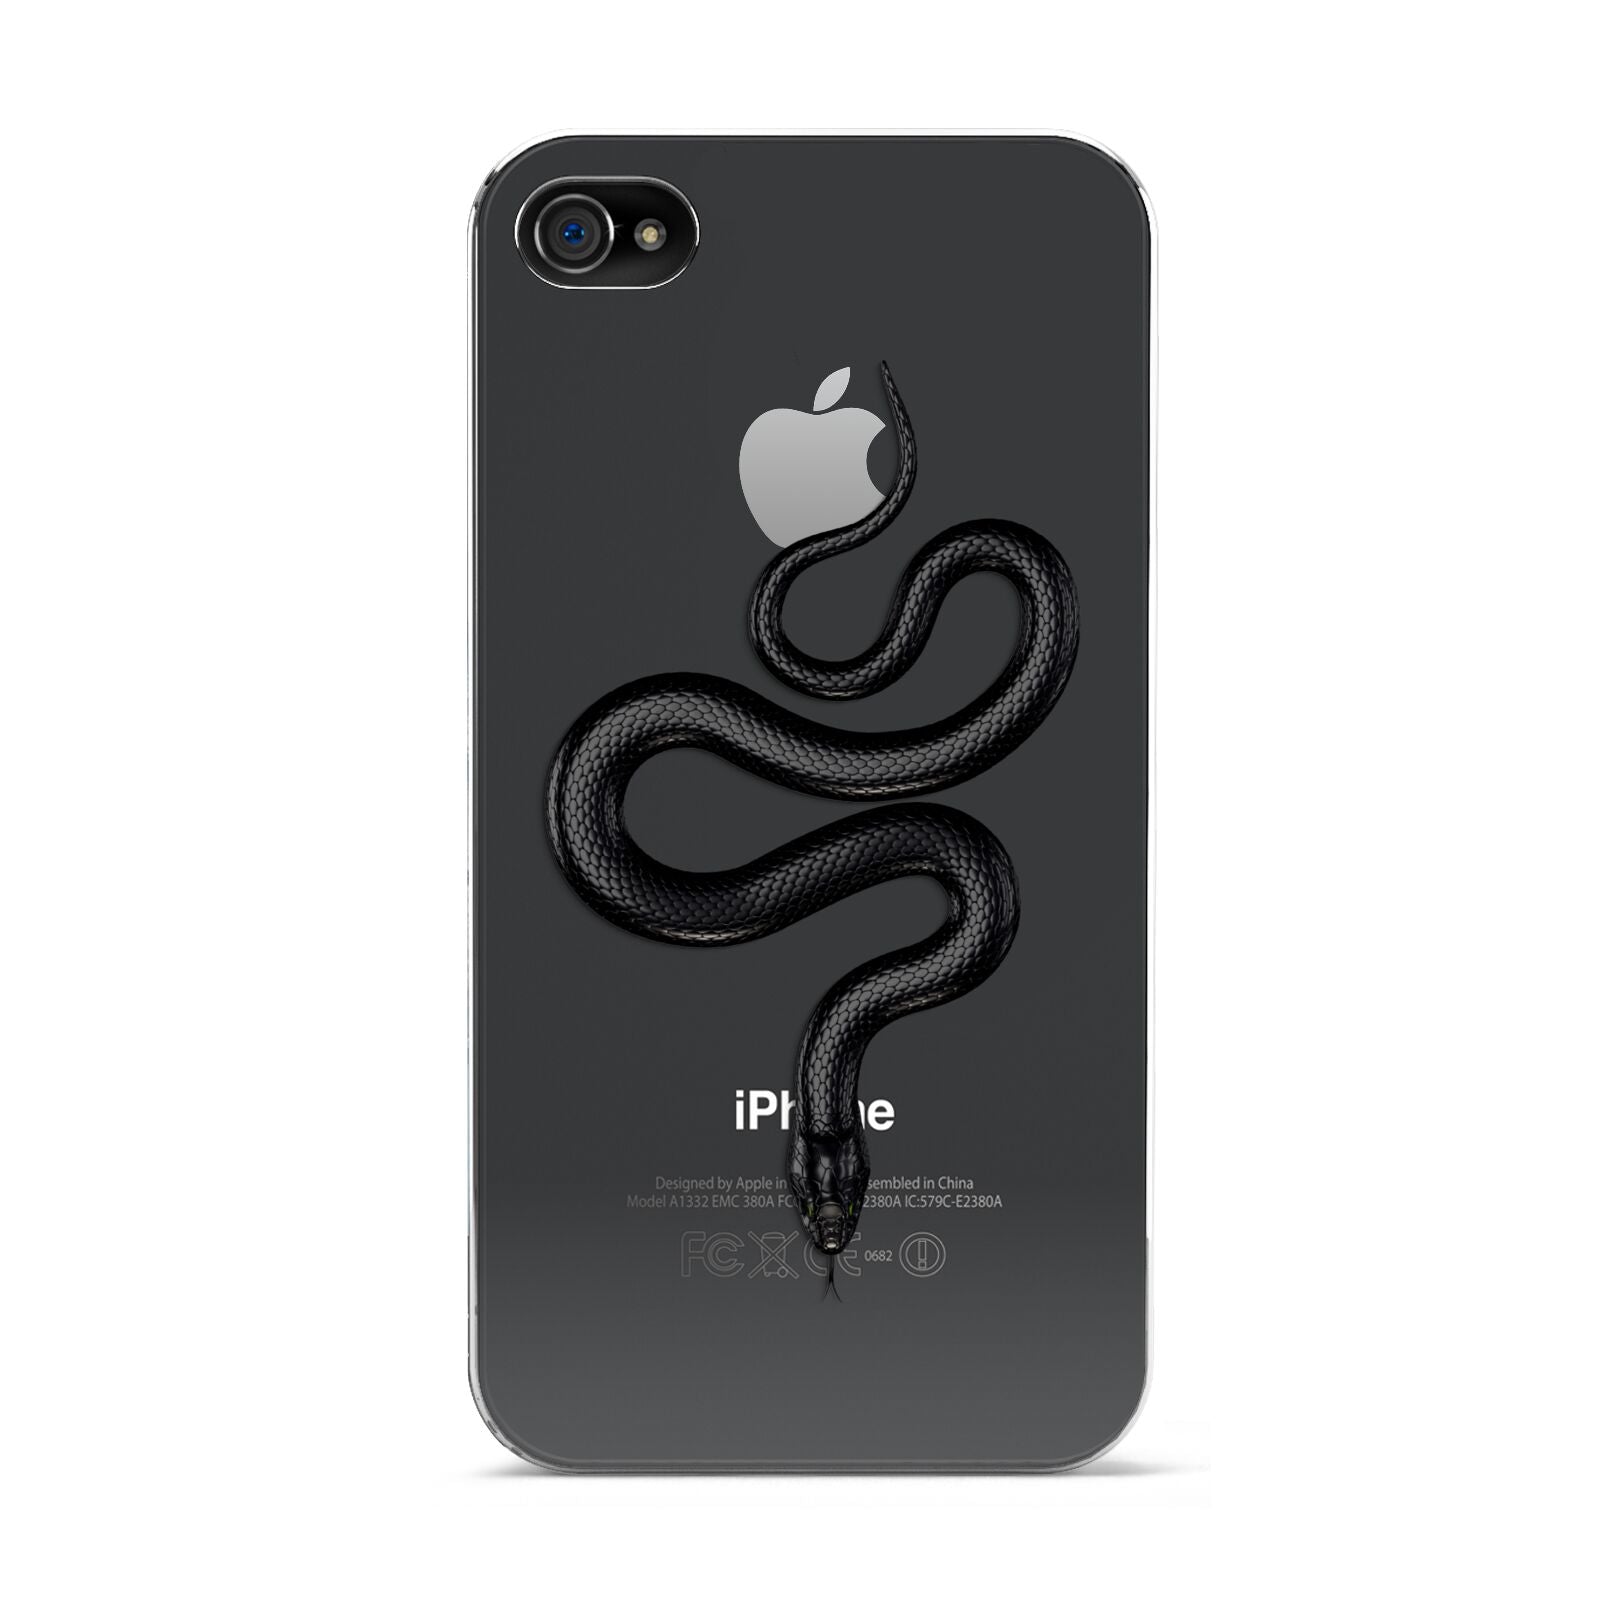 Snake Apple iPhone 4s Case